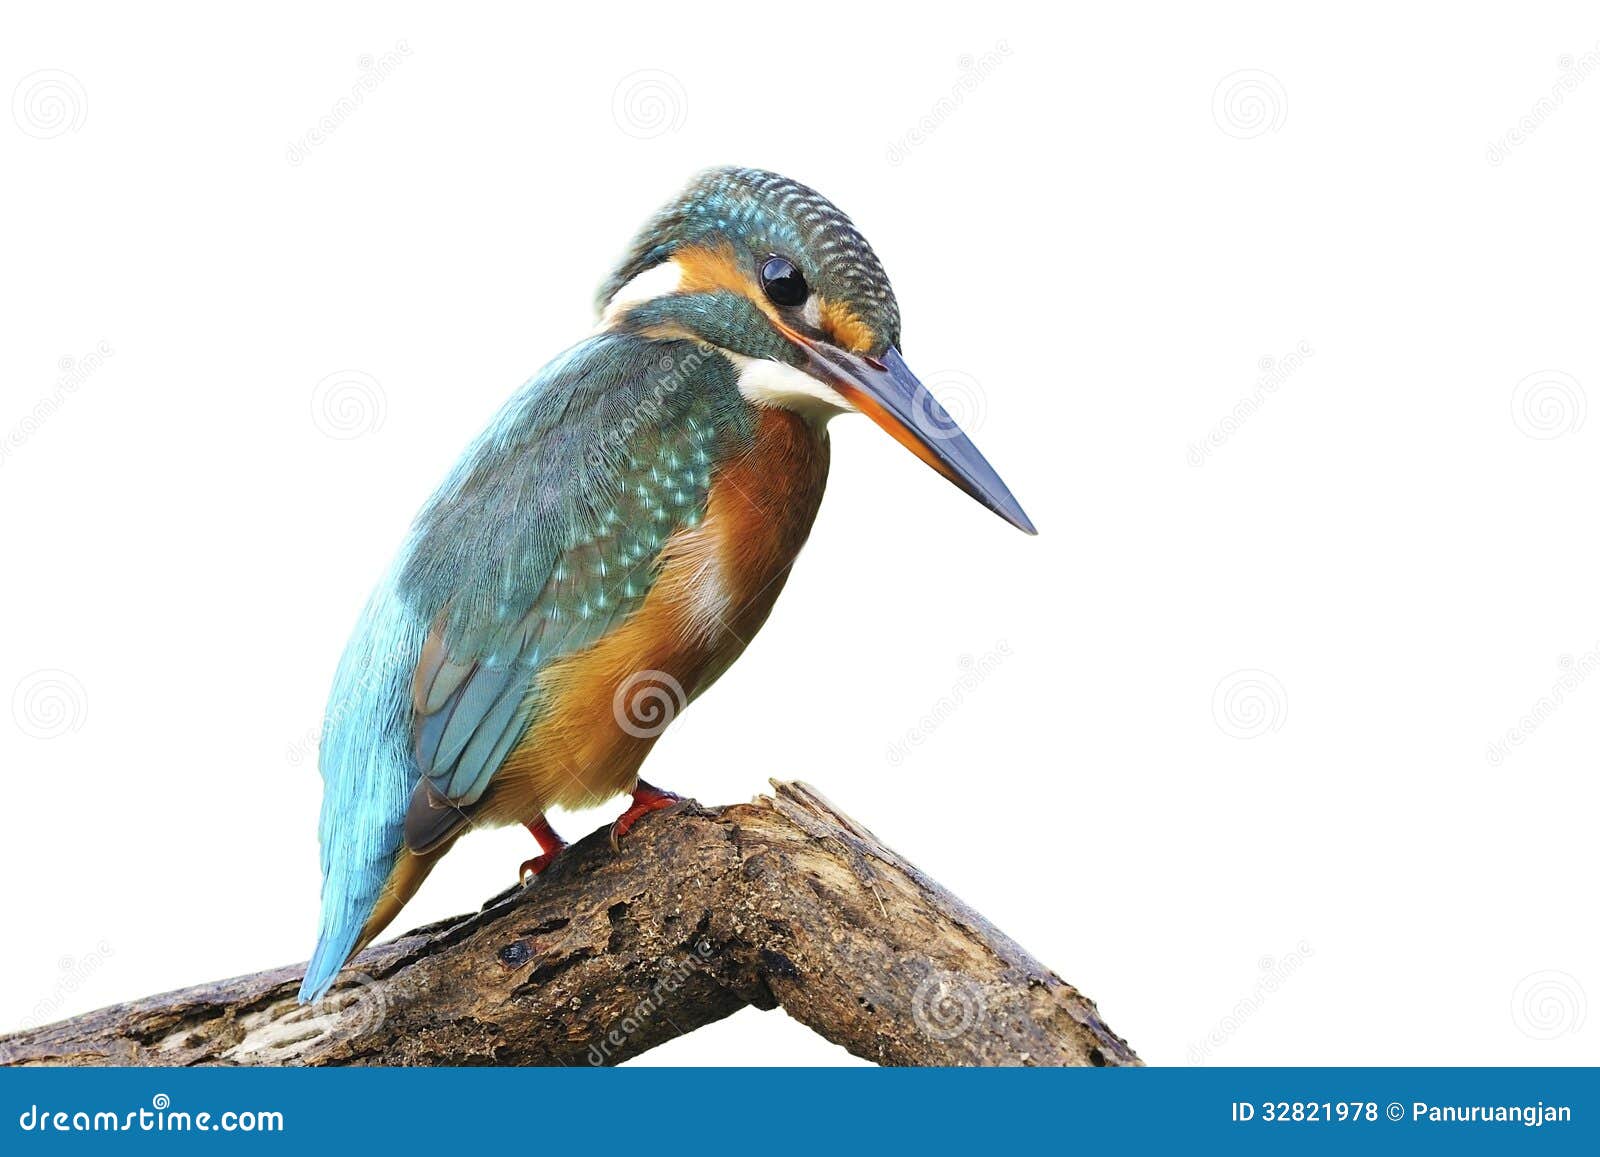 kingfisher clipart - photo #49